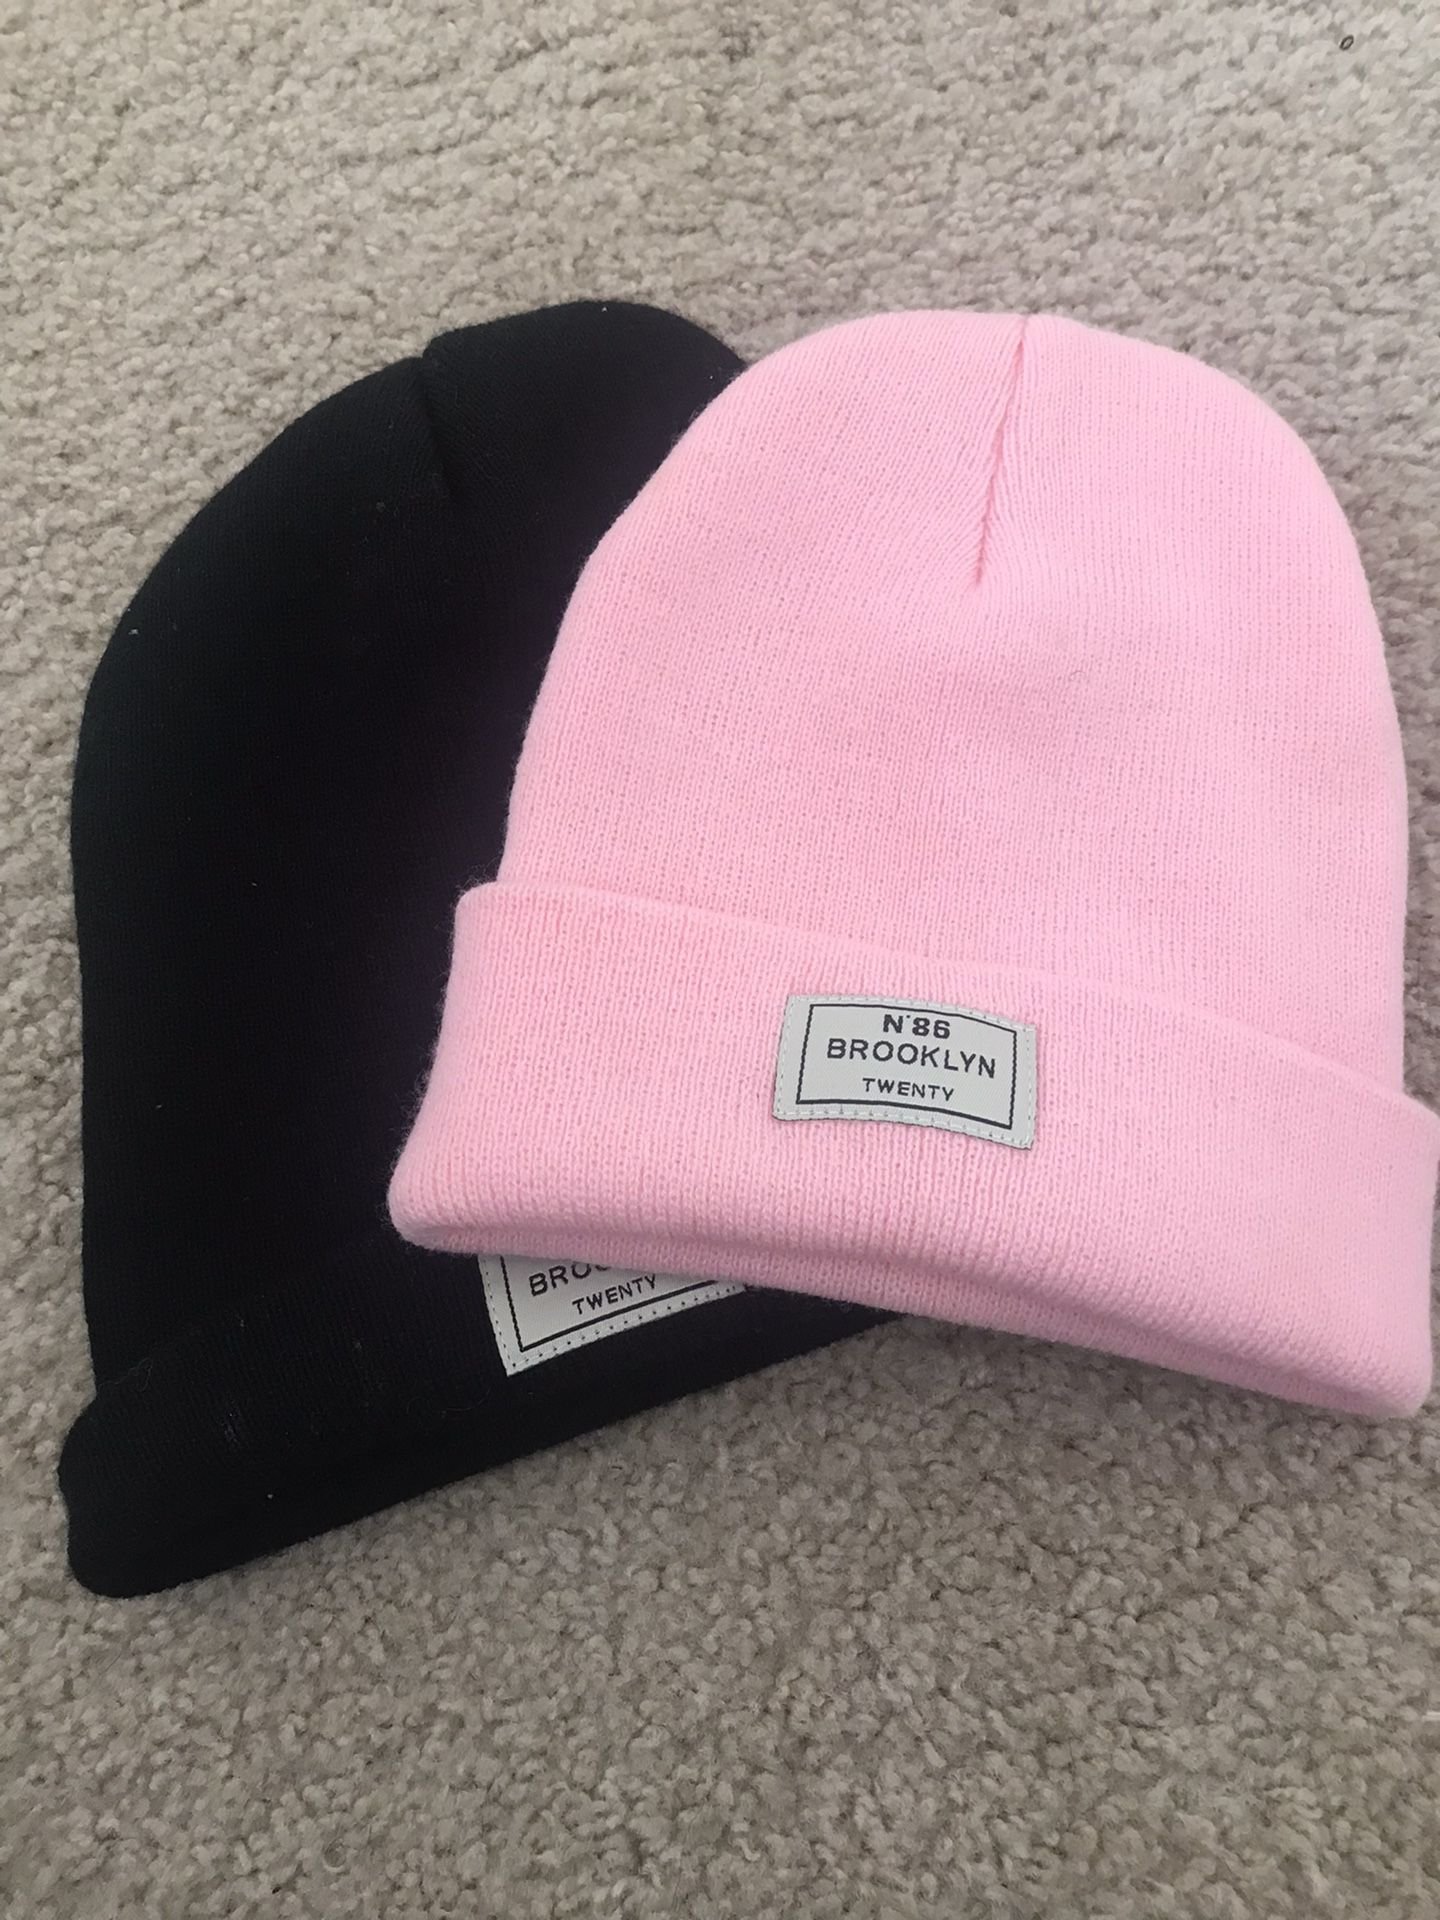 Two Brooklyn Hats Pink & Black